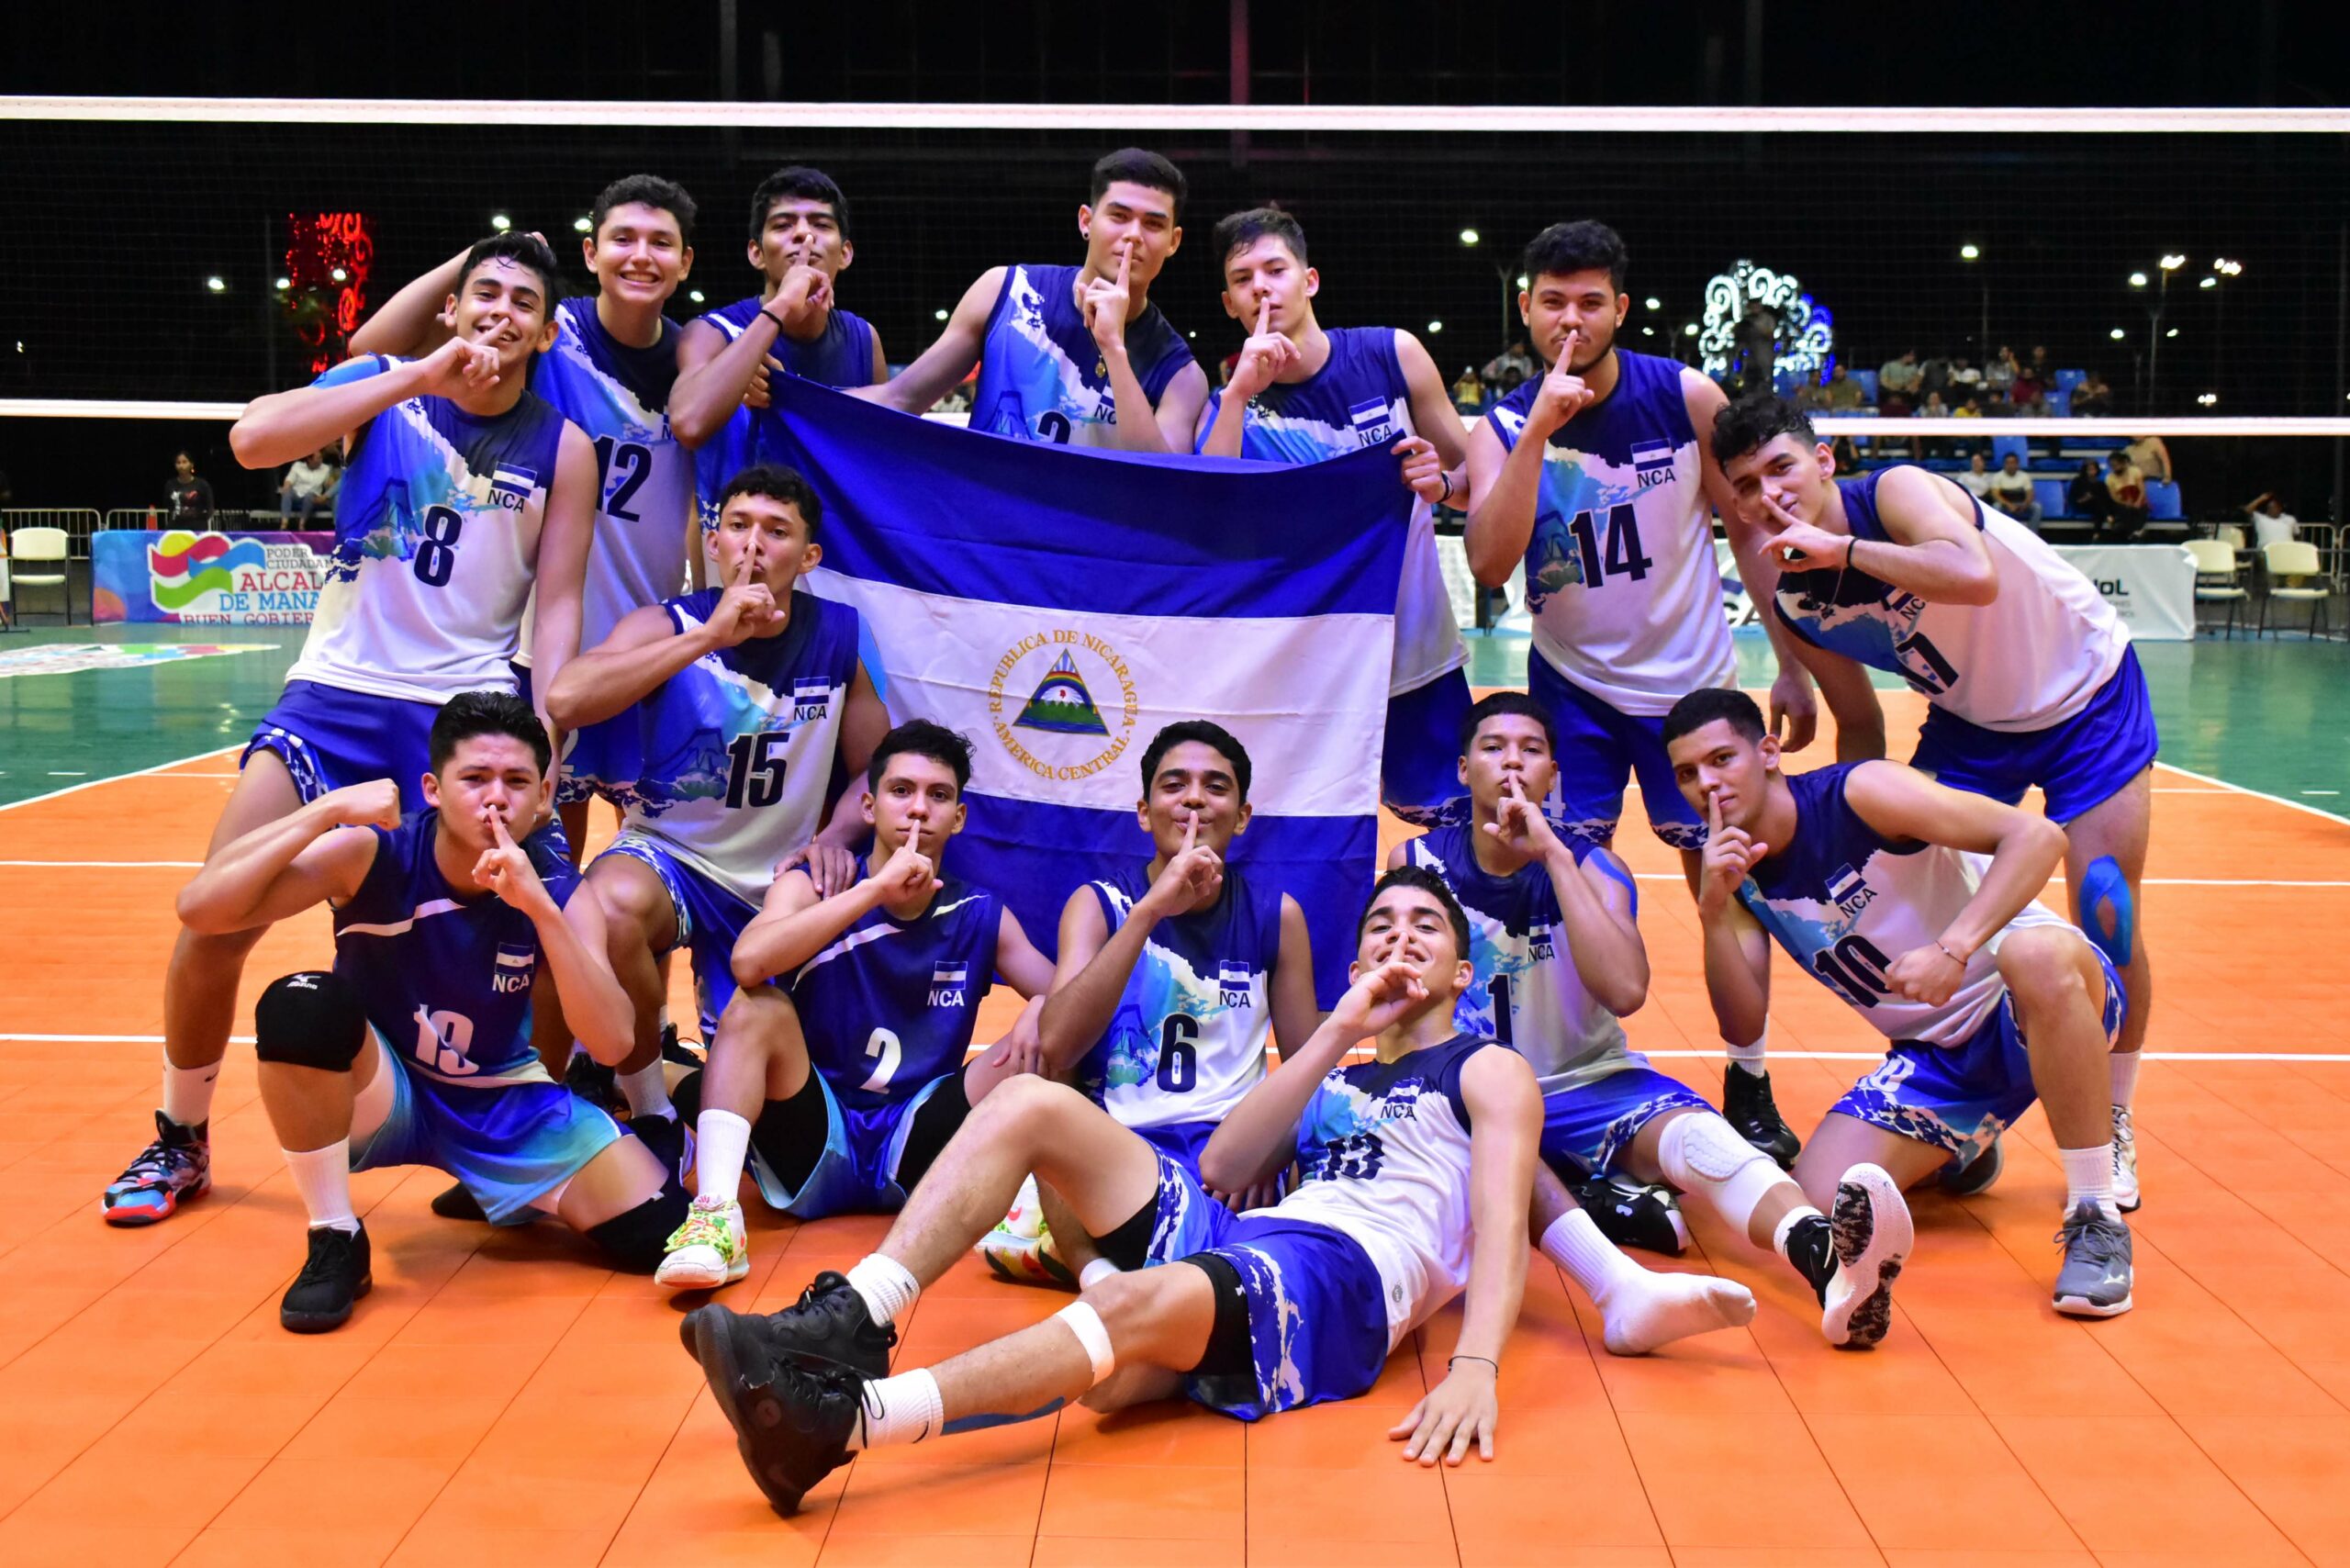 Nicaragua wins silver medal beating Belize 3-0